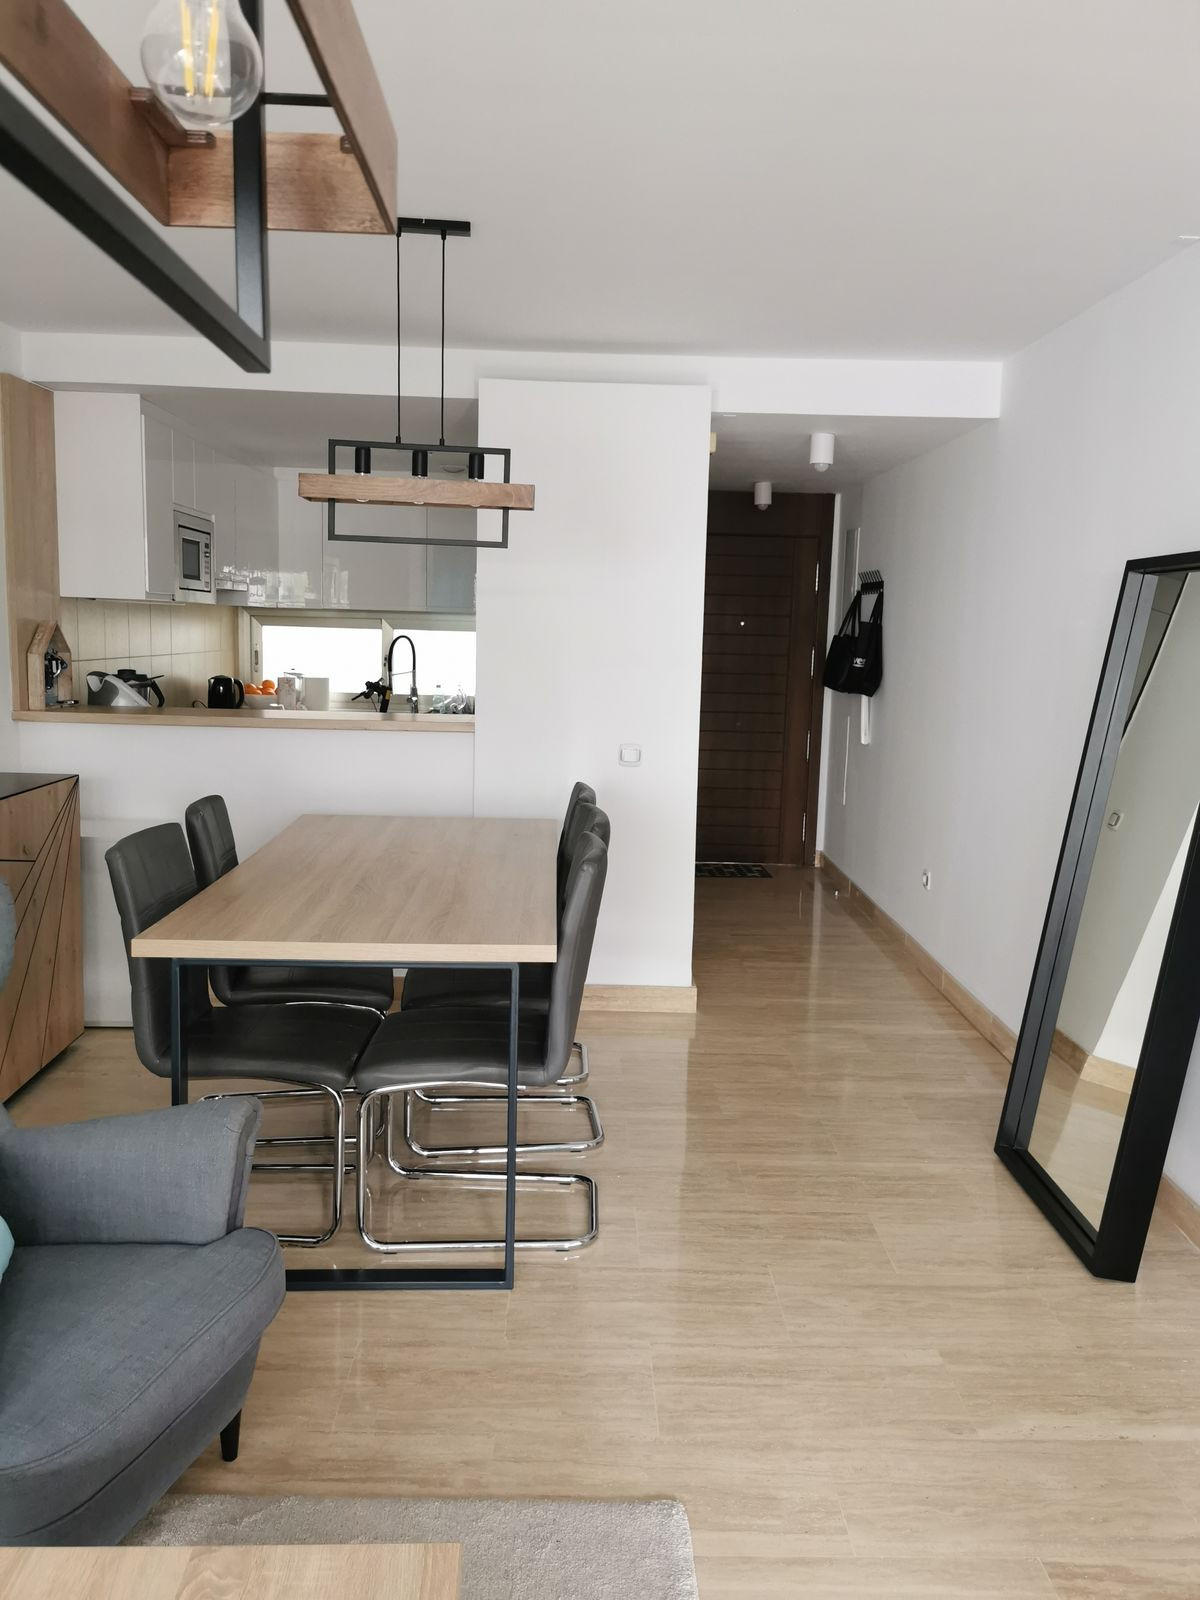 1 bedroom Apartment For Sale in Mijas, Málaga - thumb 9